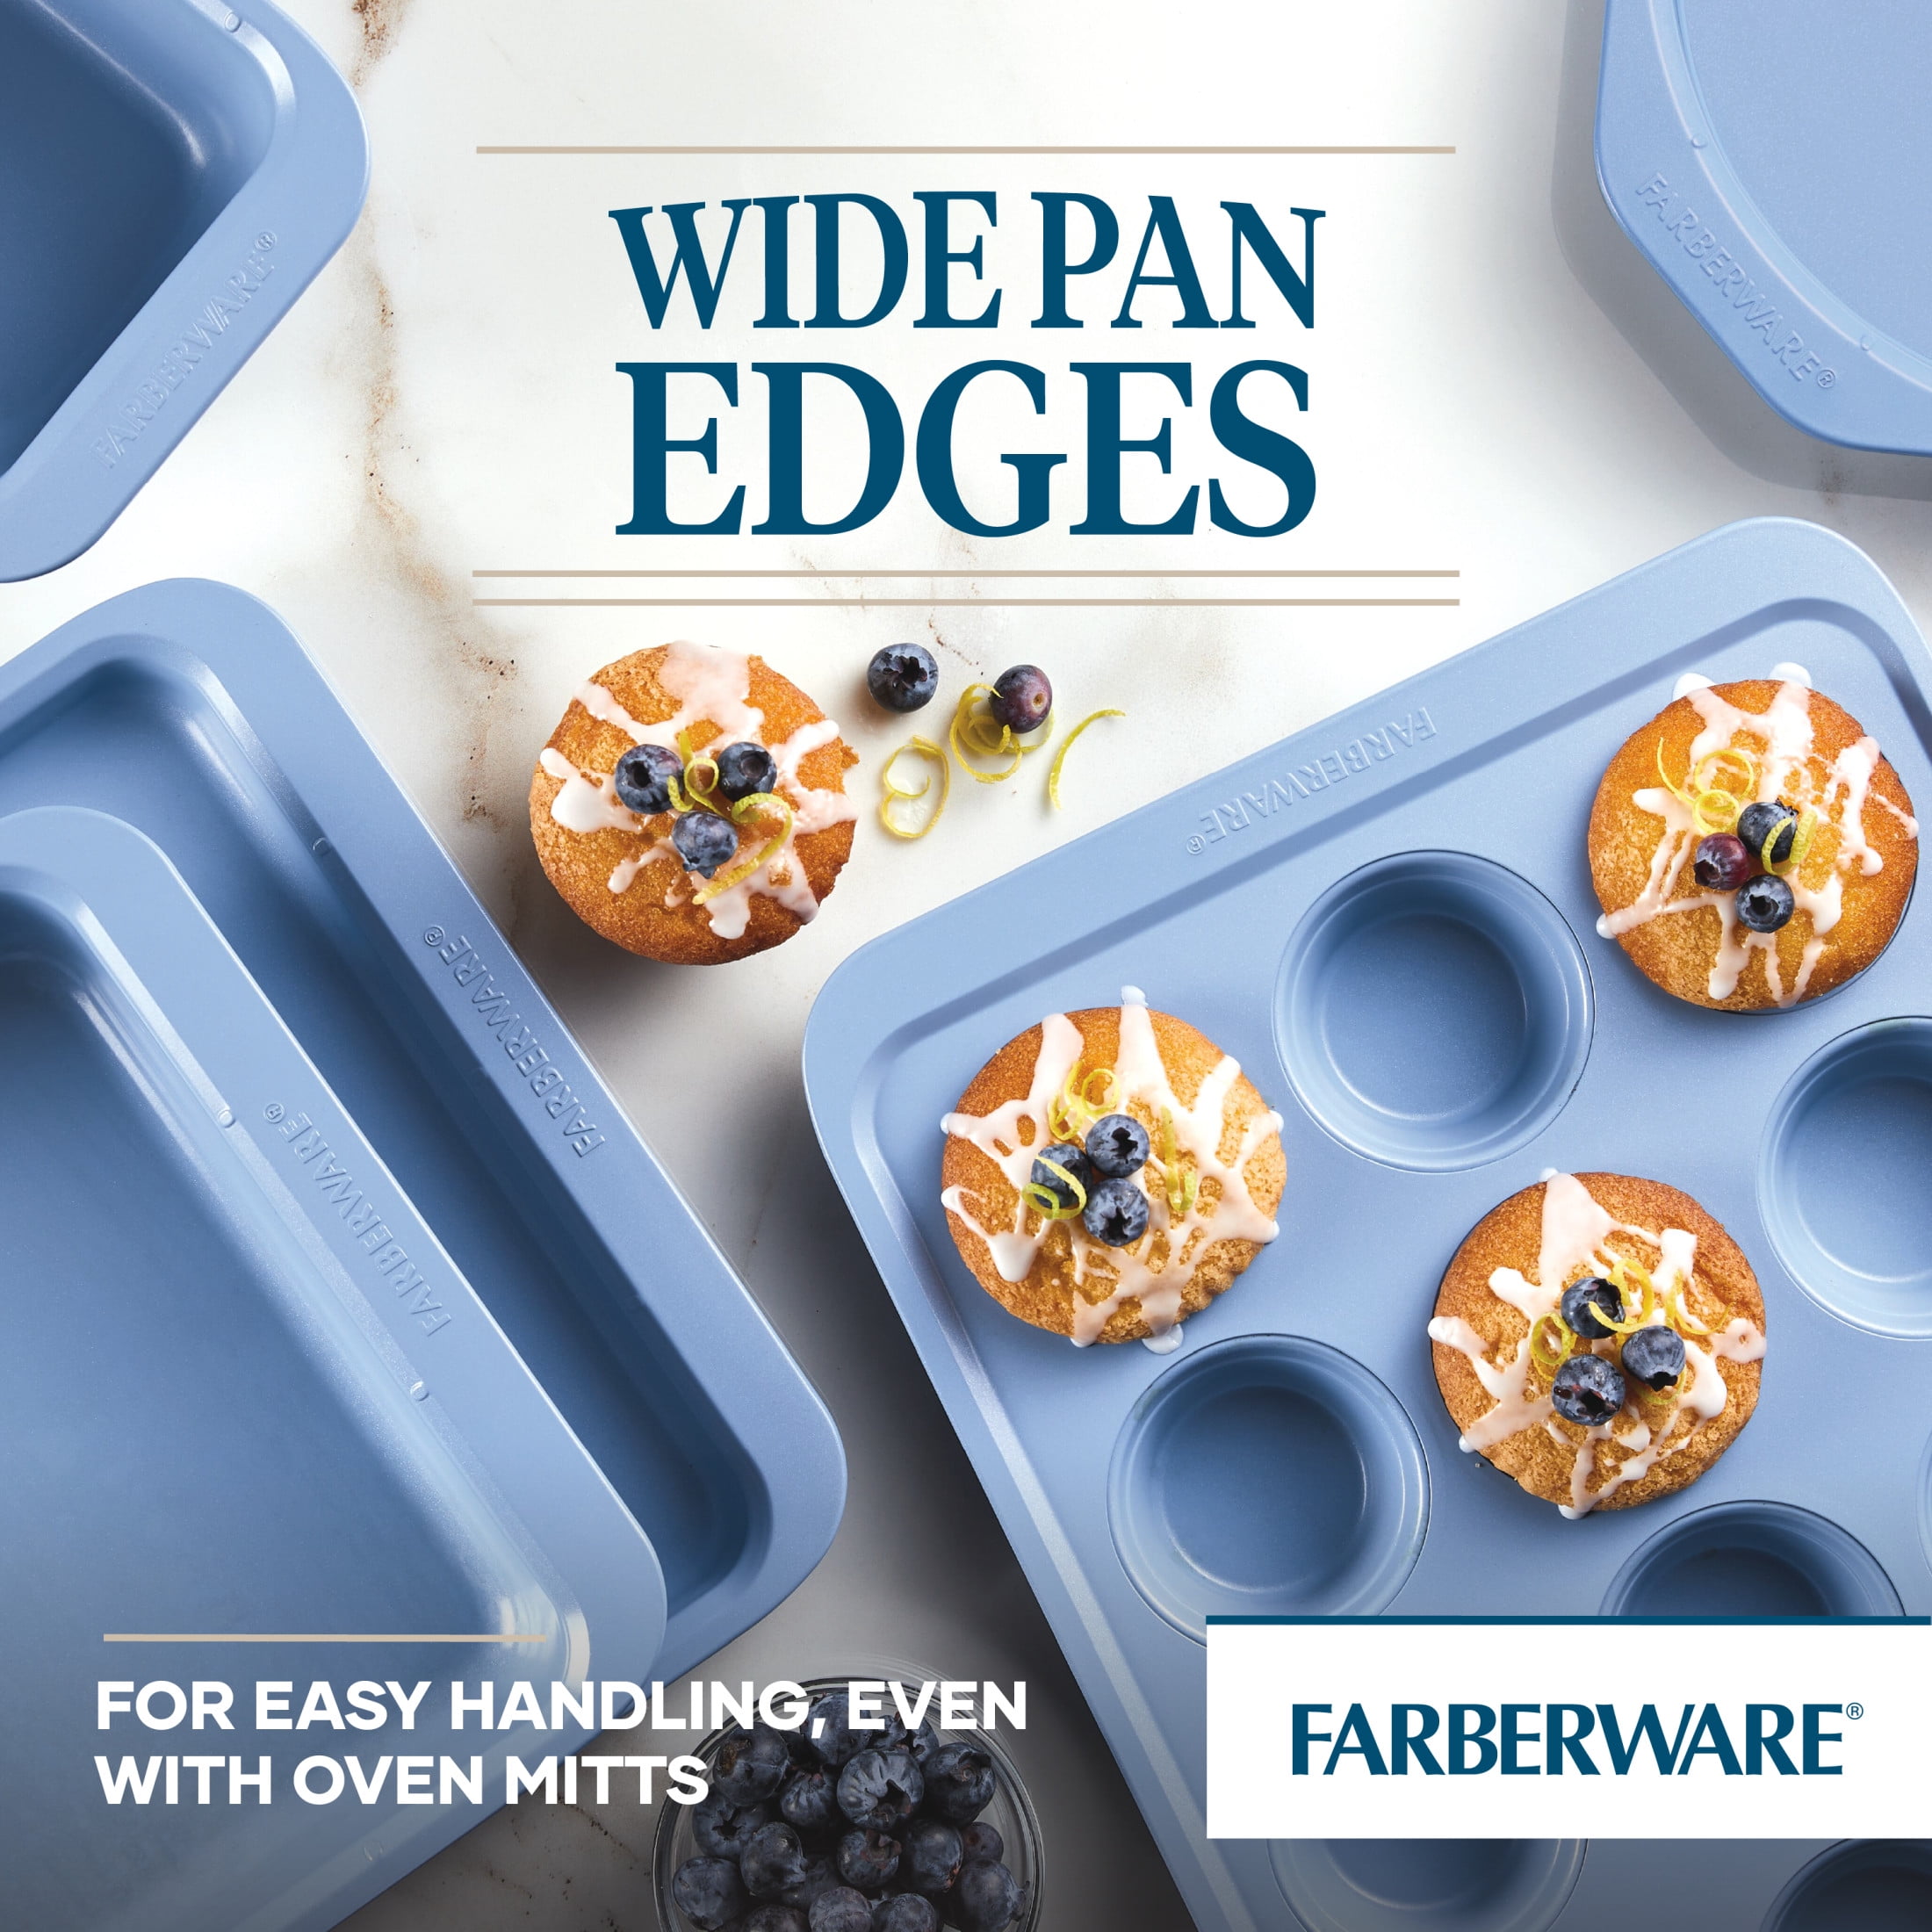  Farberware Insulated Bakeware Nonstick Cookie Baking Sheet, 14  x 16, Light Gray: Baking Sheets: Home & Kitchen